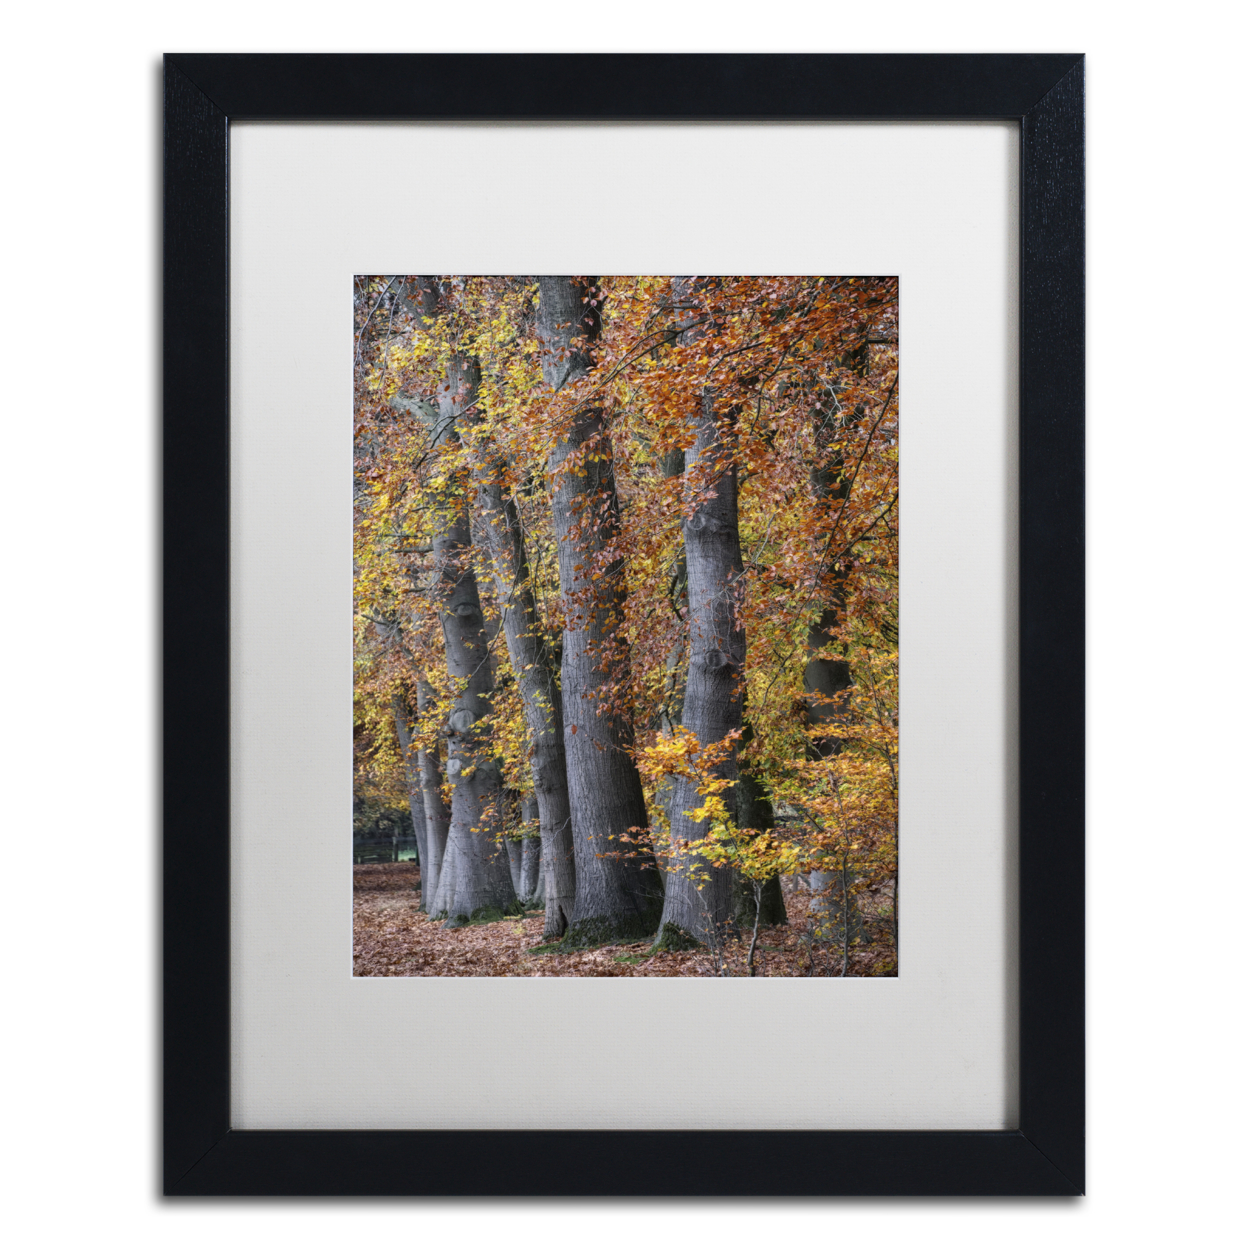 Cora Niele 'Autumn Beeches II' Black Wooden Framed Art 18 X 22 Inches